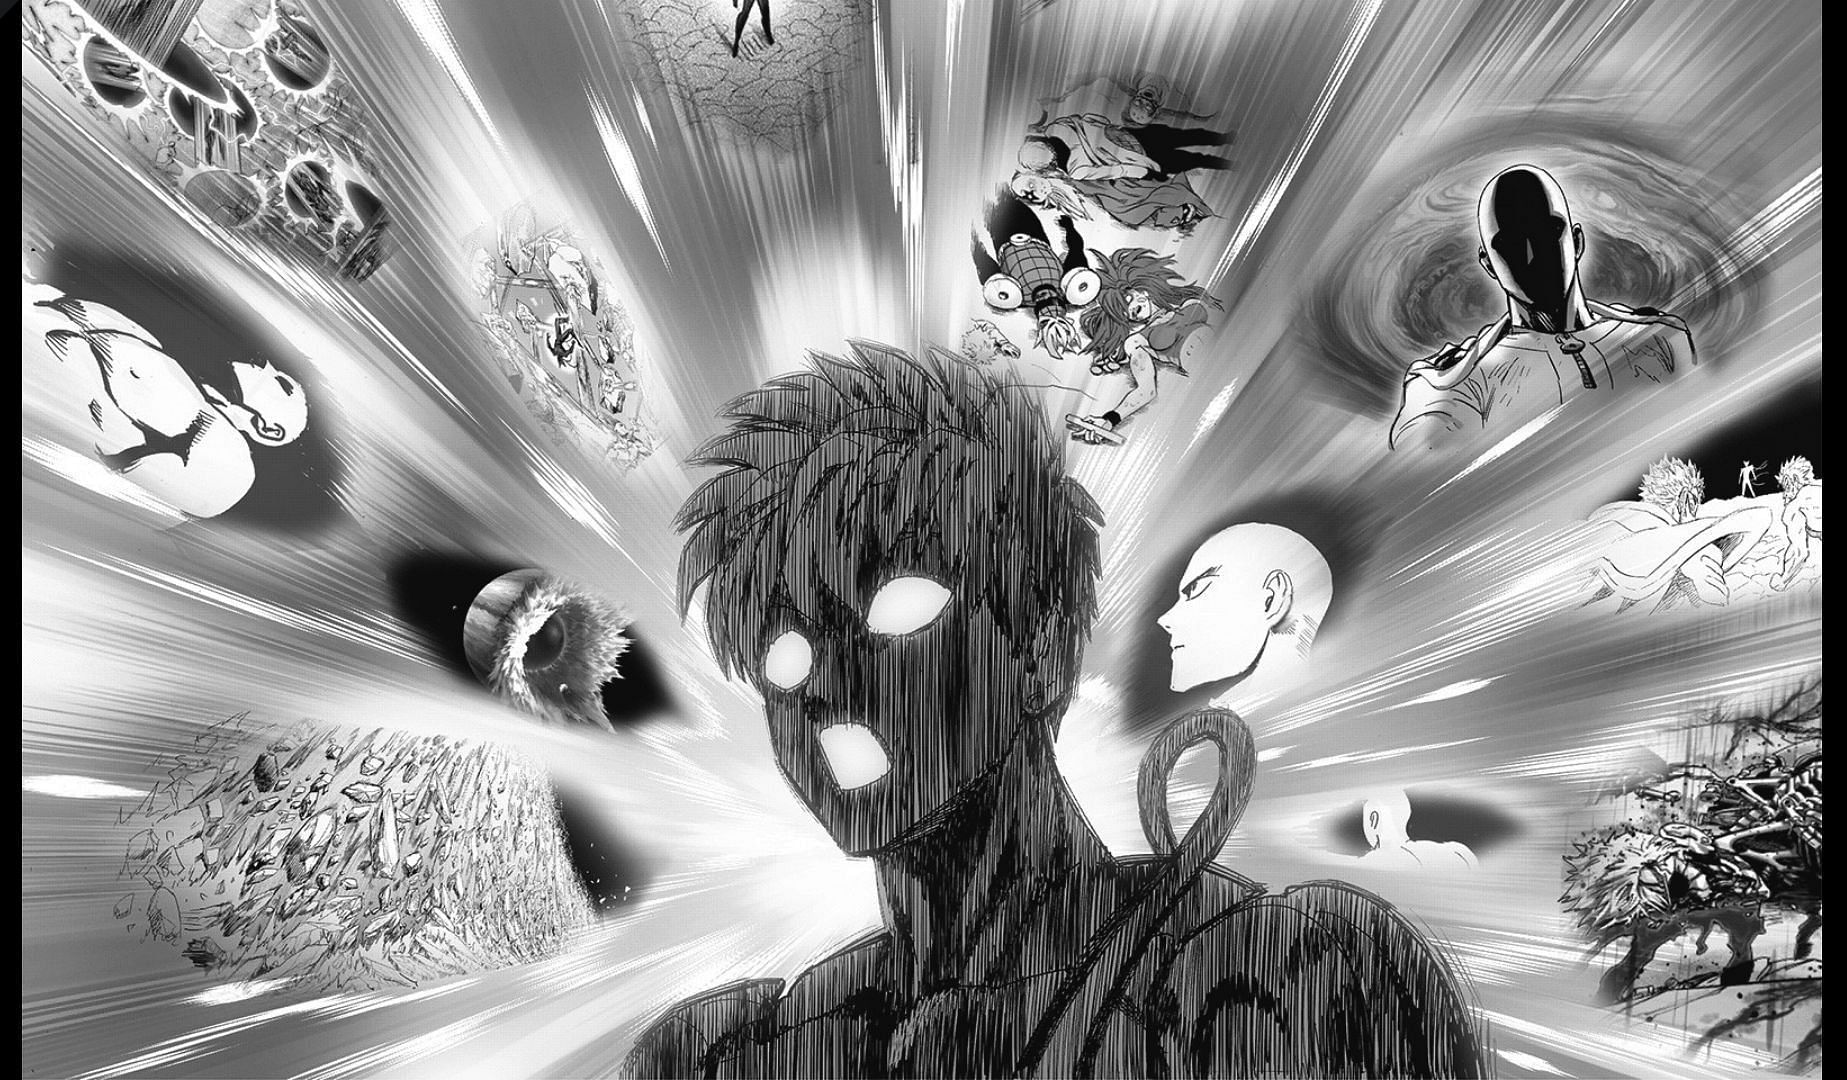 NEWS] One Punch Man Season 3 Officially Announced! : r/manga